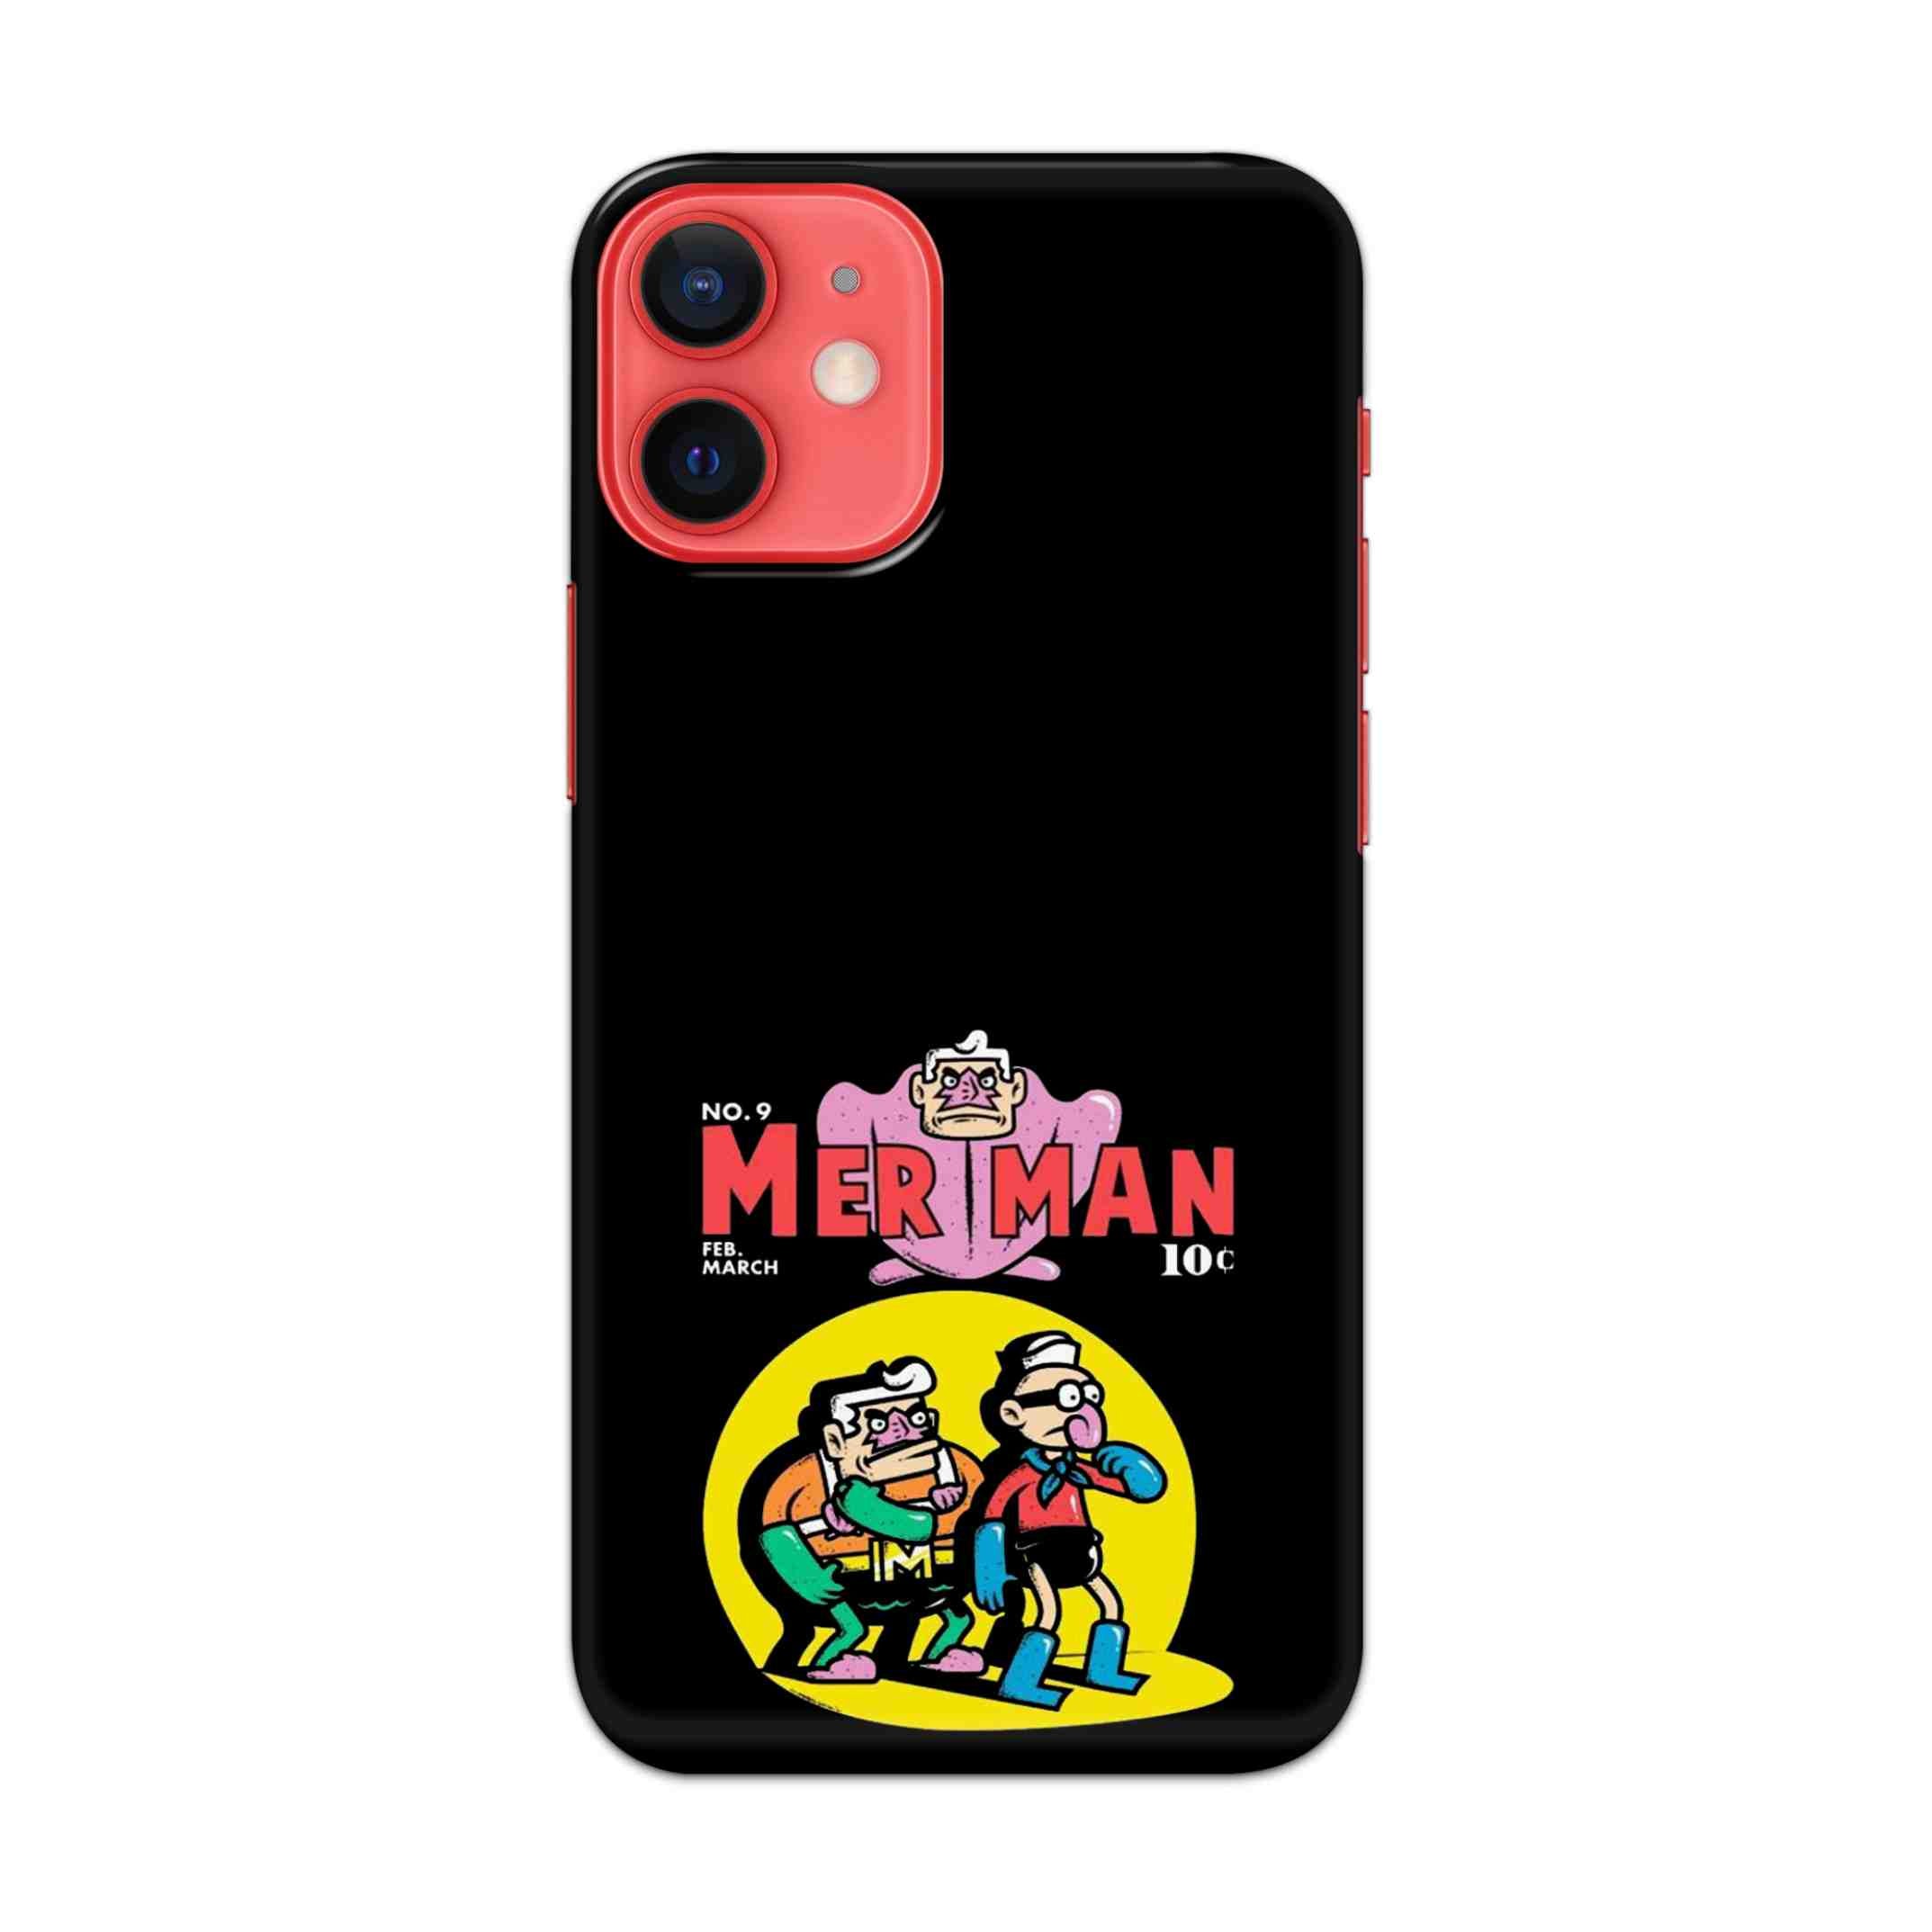 Buy Merman Hard Back Mobile Phone Case/Cover For Apple iPhone 12 mini Online